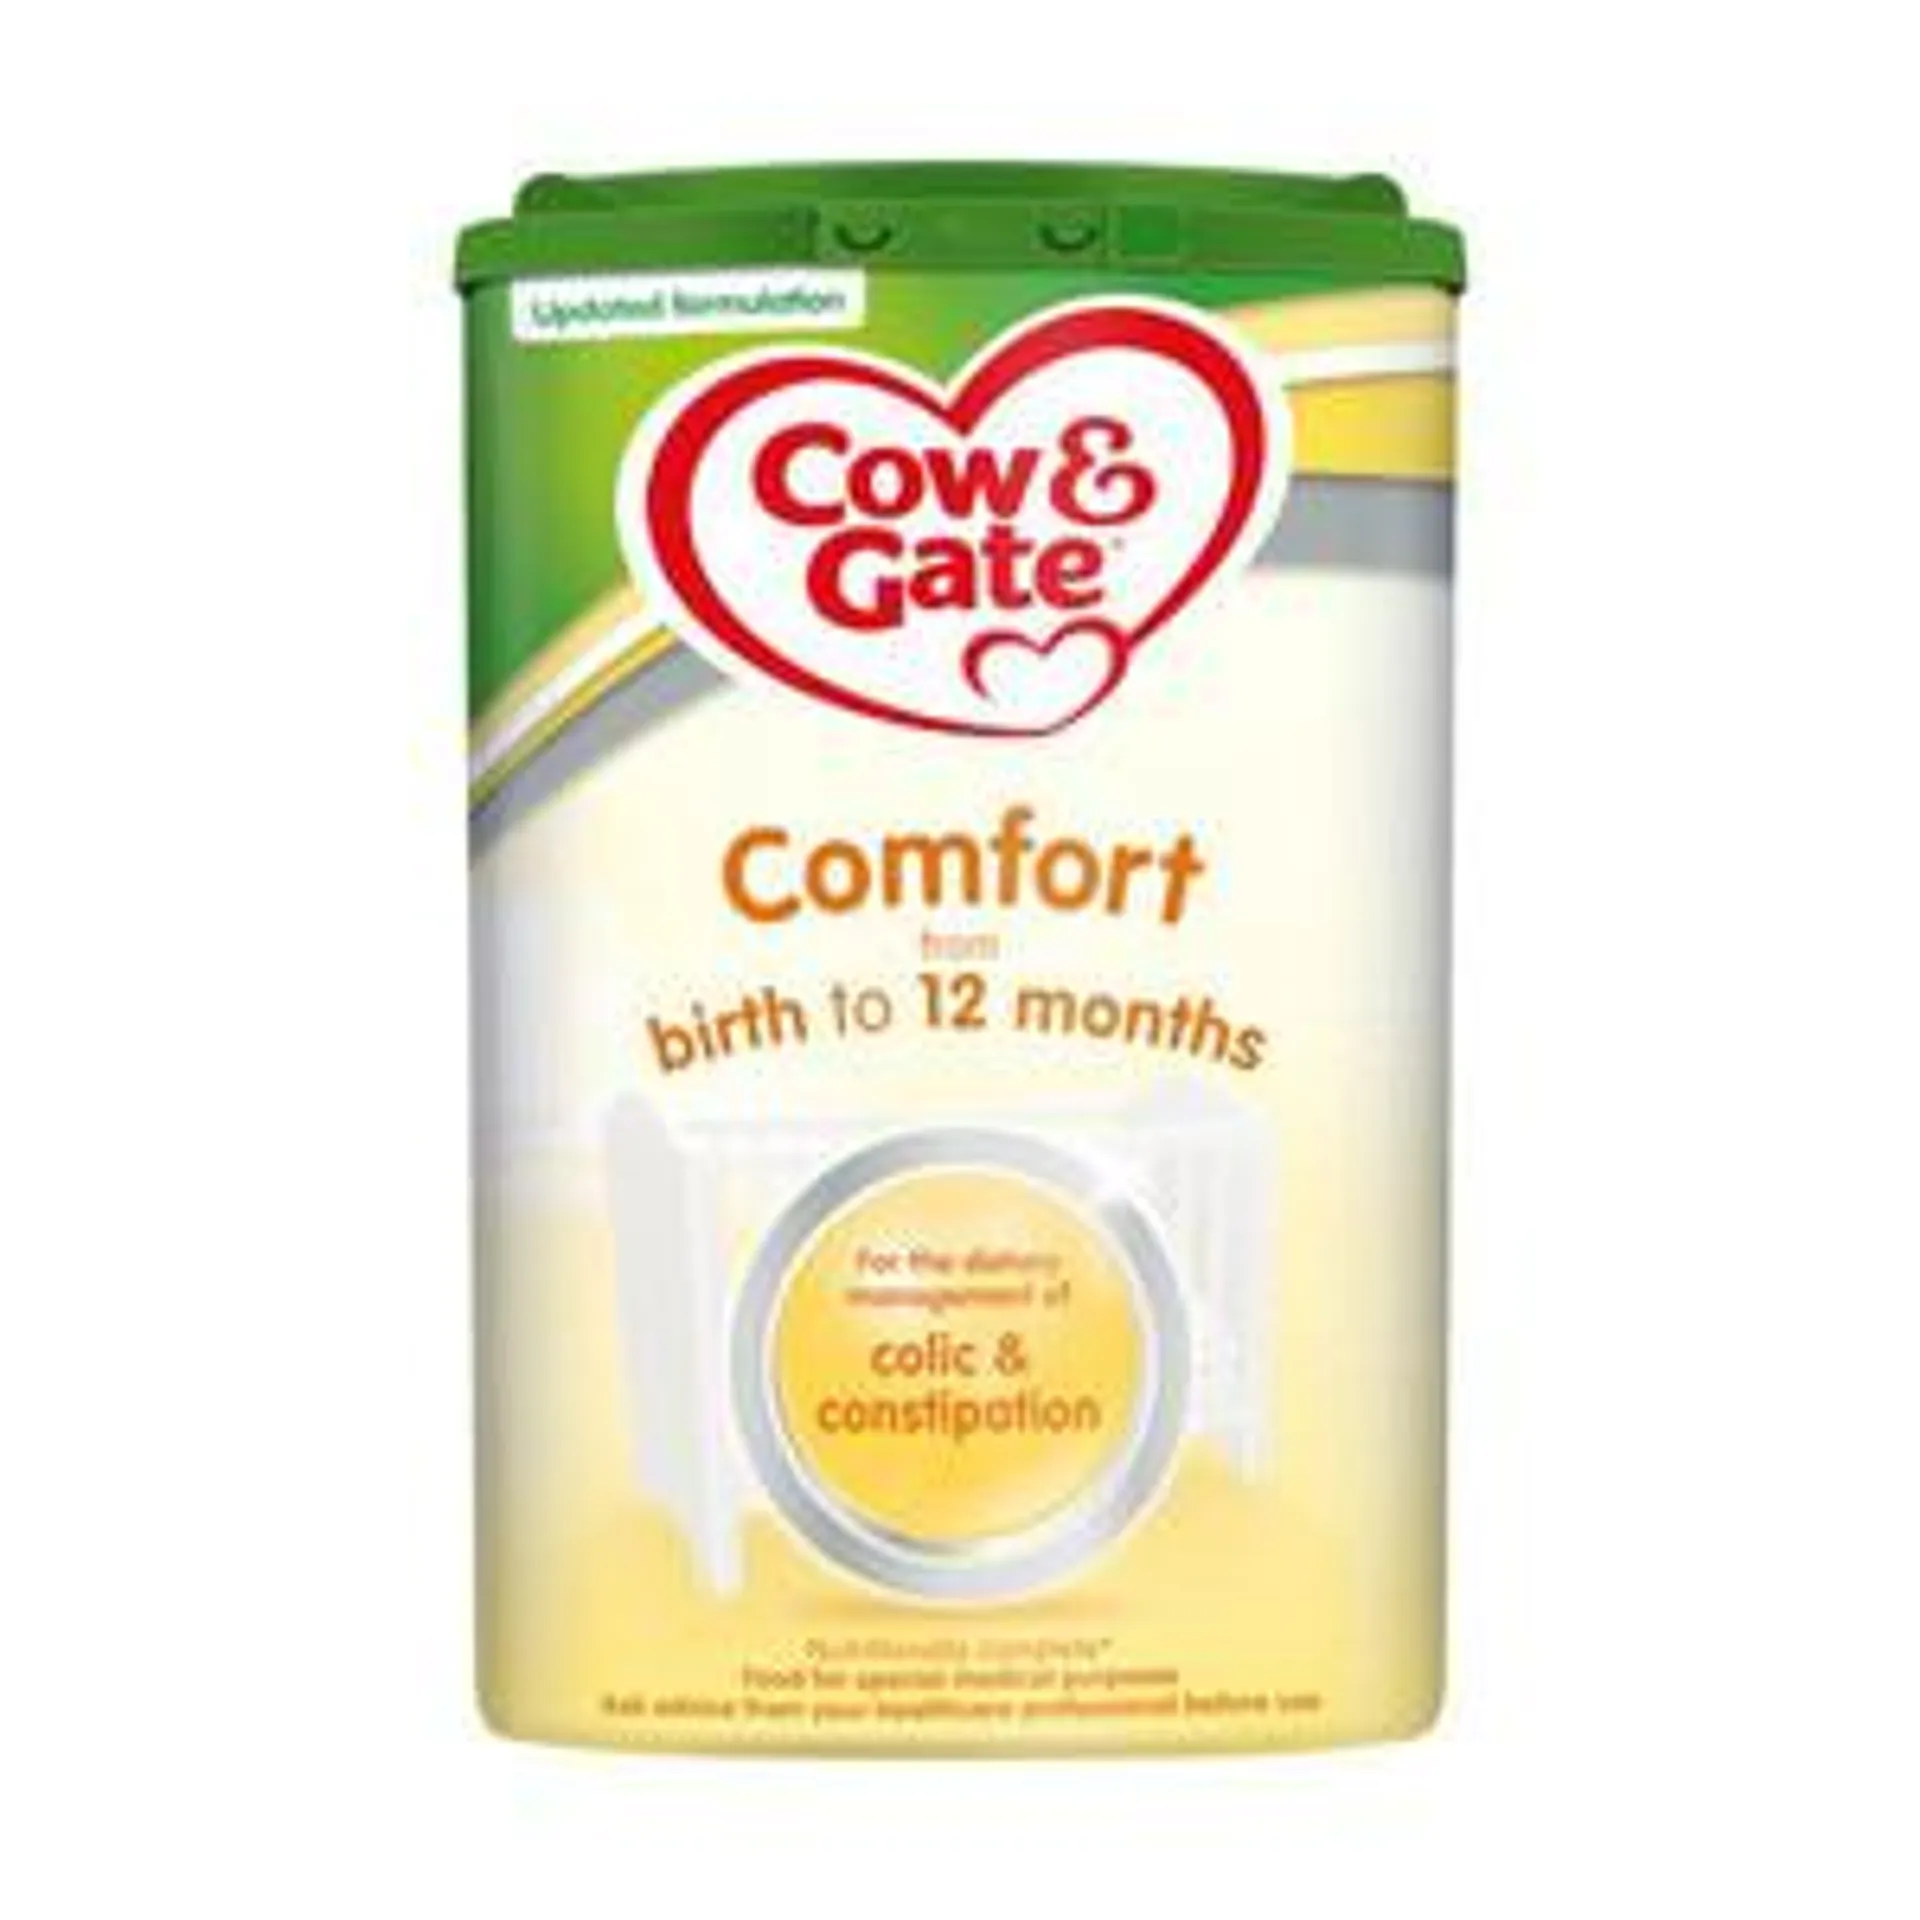 Cow & Gate Comfort Milk 800g